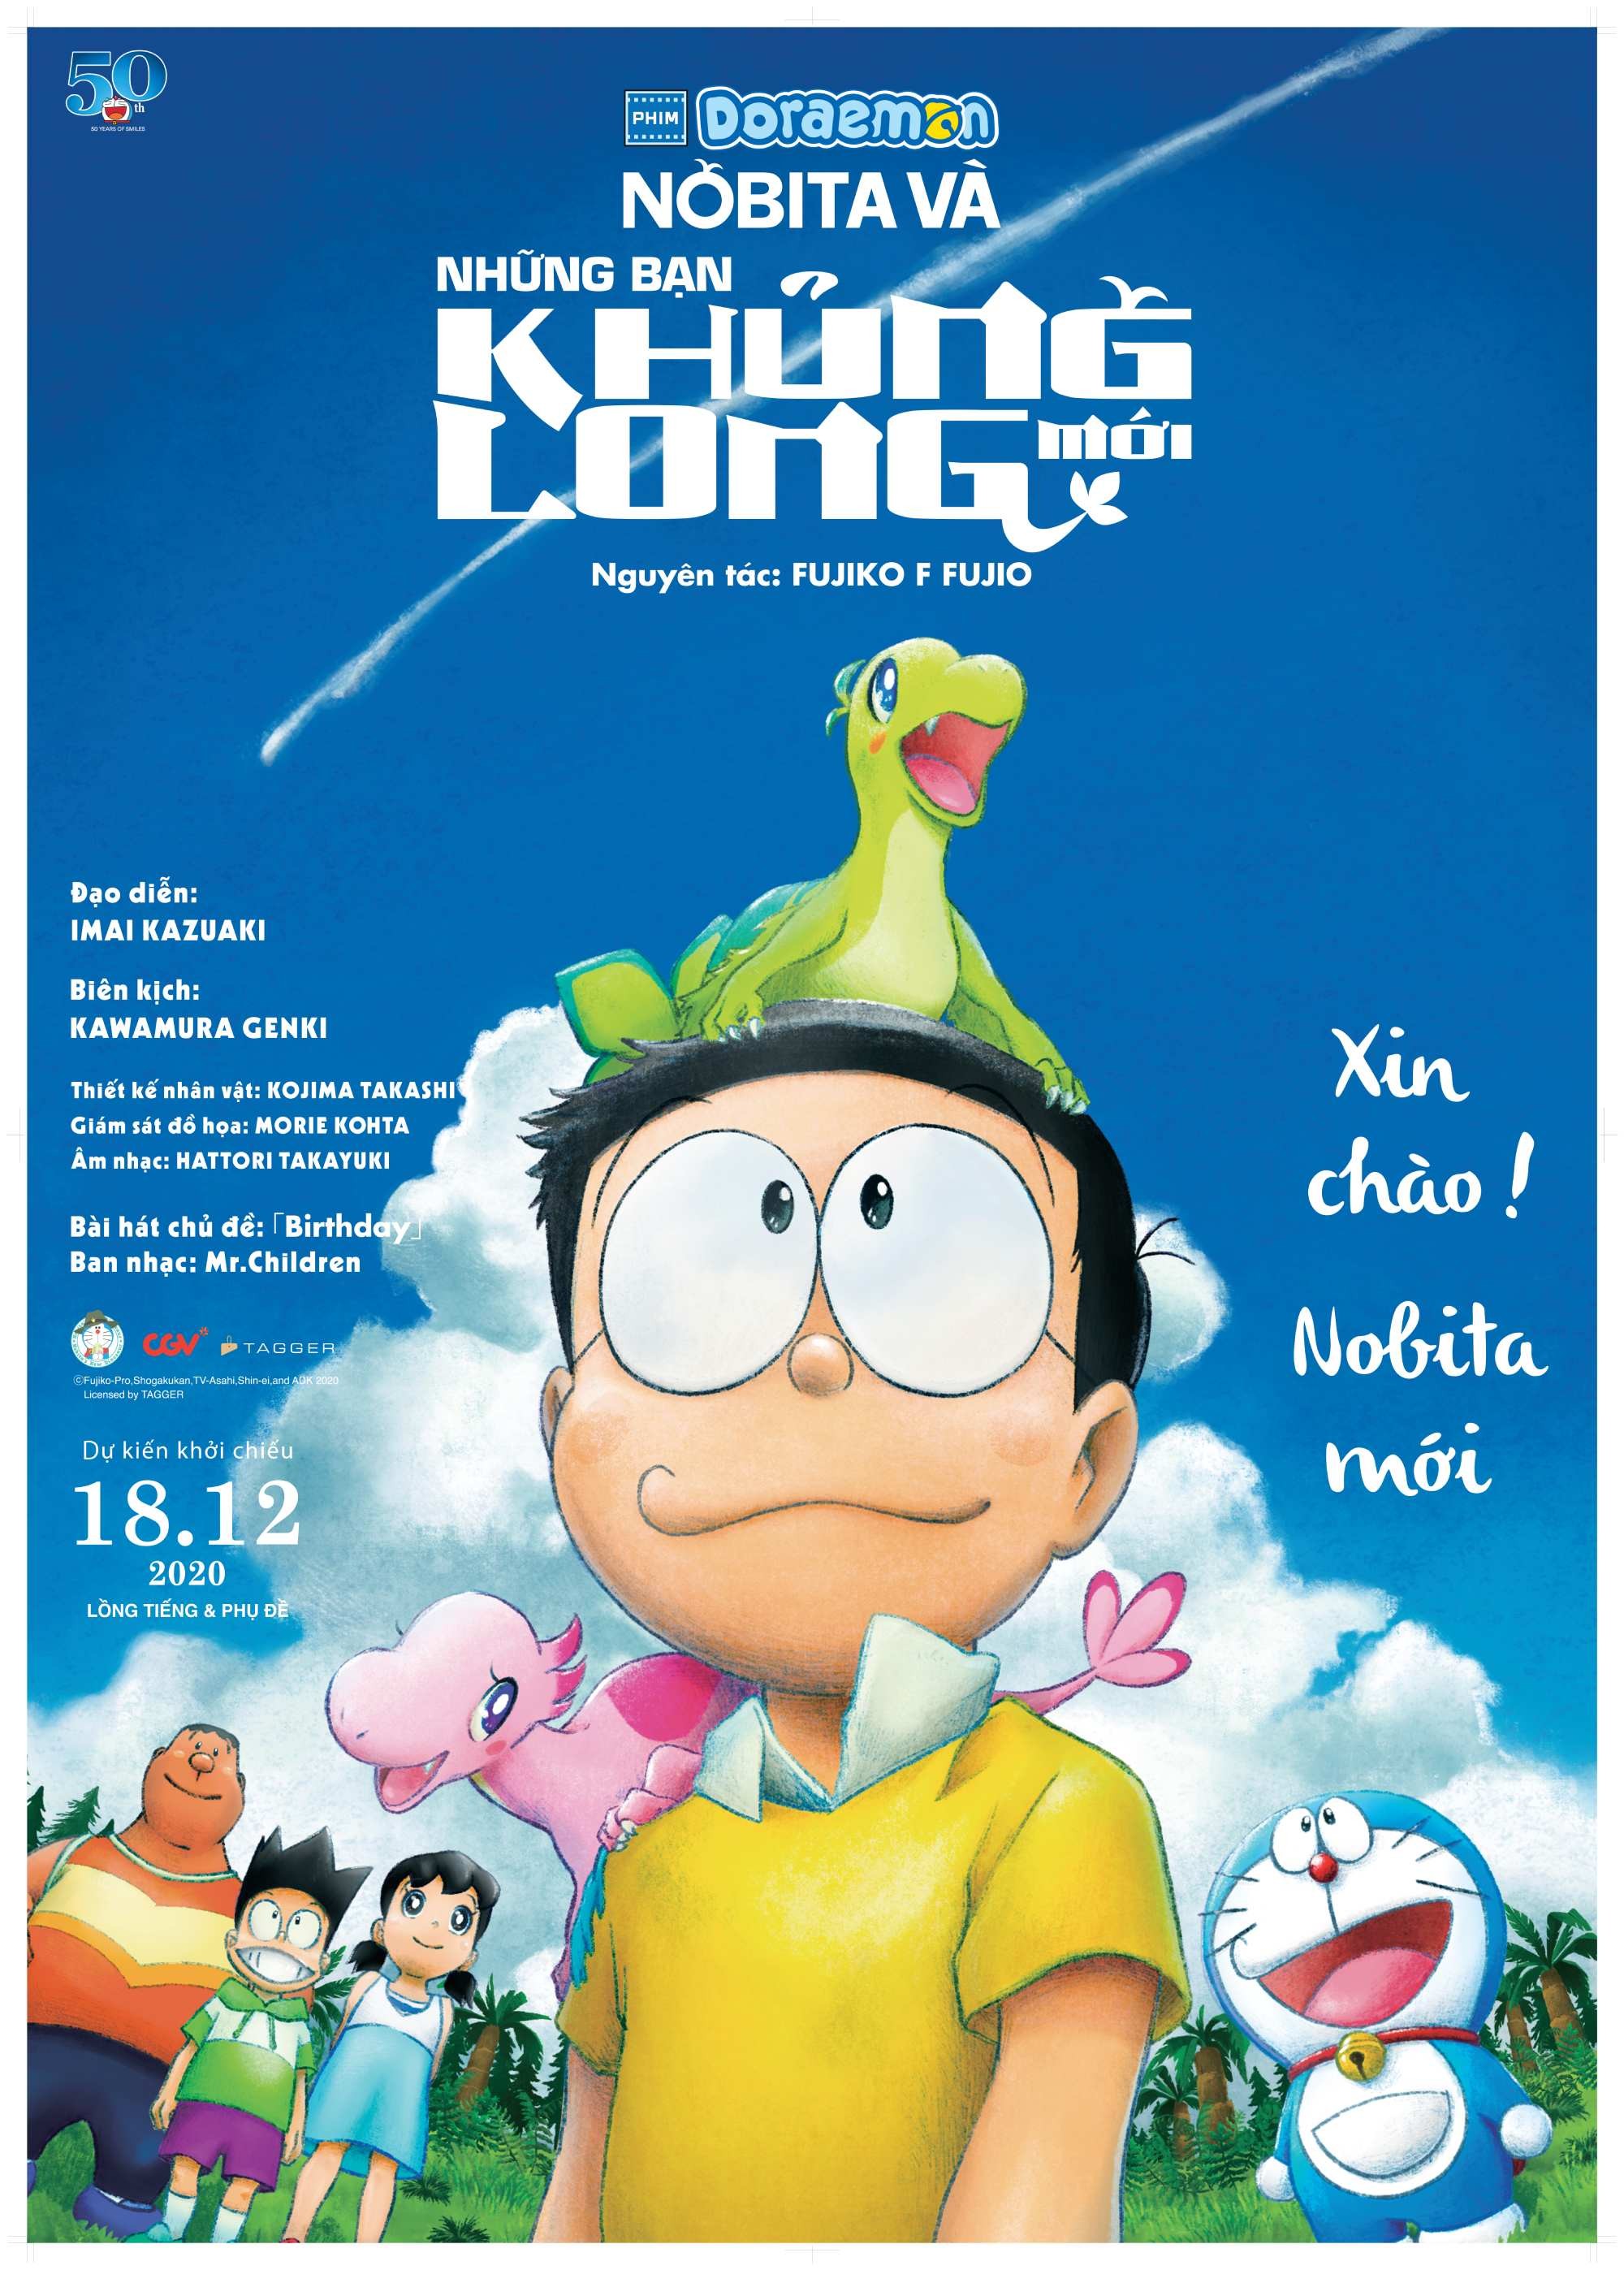 Giới thiệu về Phim Doraemon Mới